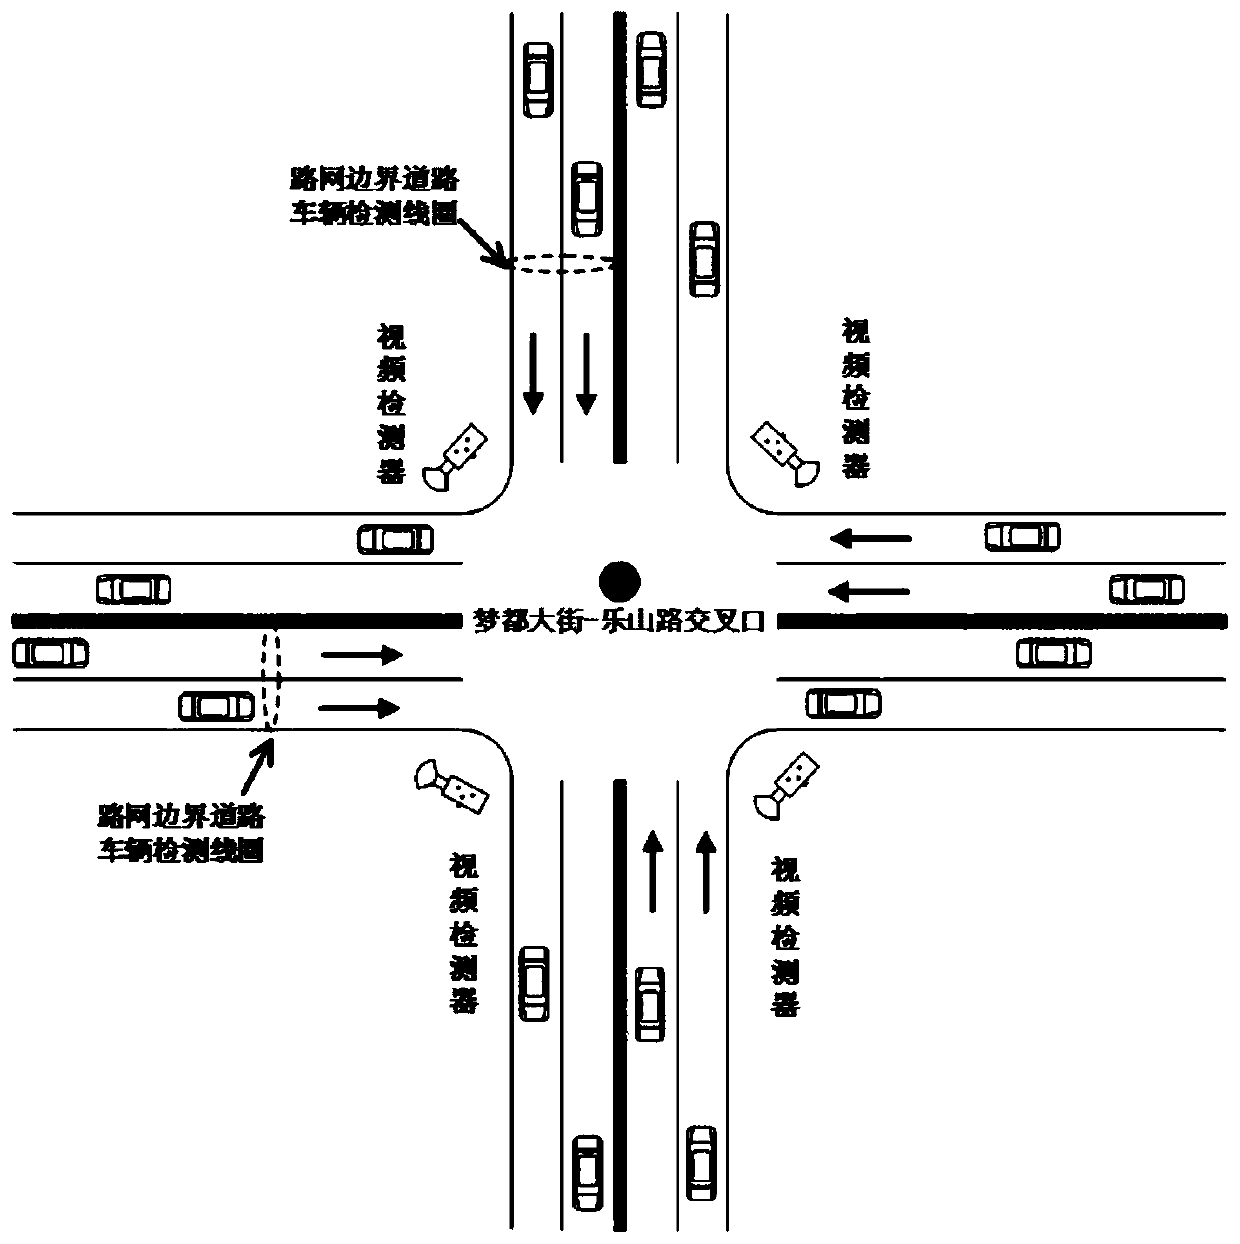 A road network dynamic traffic flow prediction method based on simulink simulation